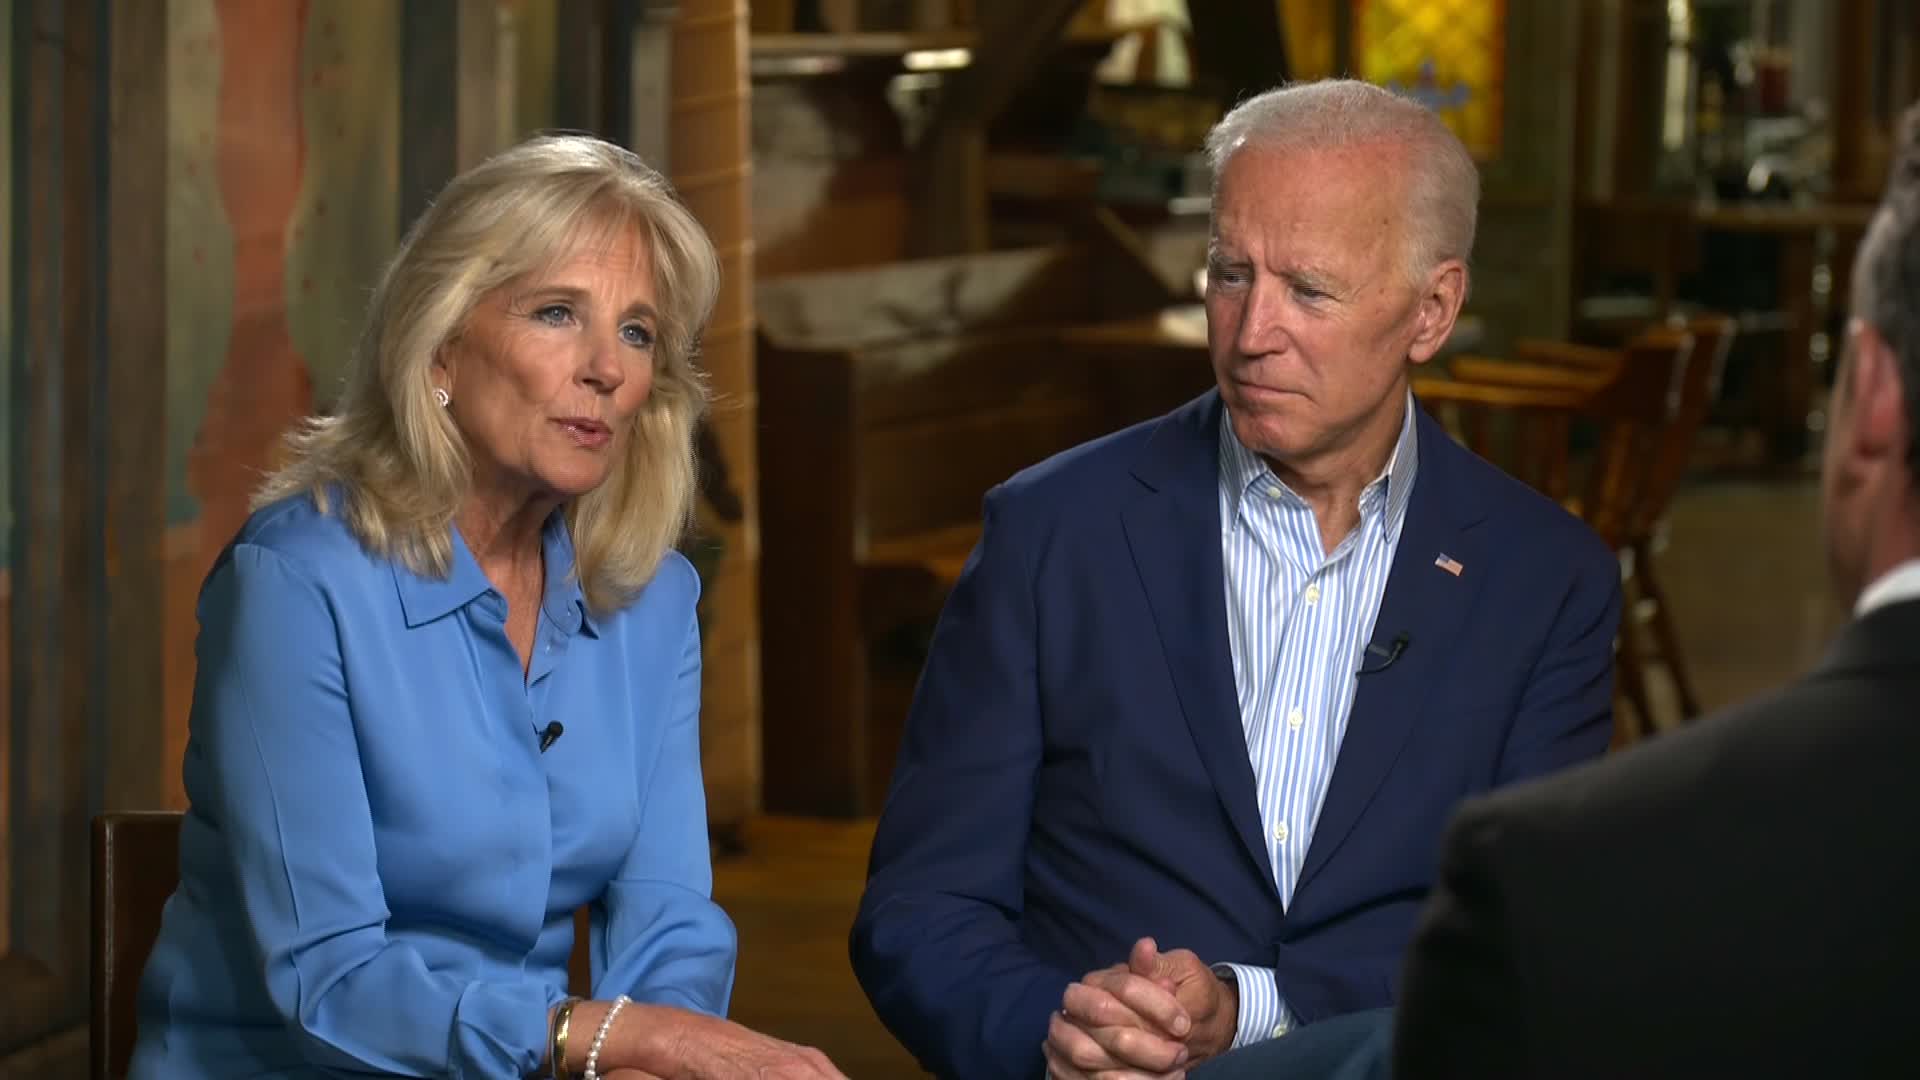 Jill Biden: This is when I knew Joe needed to run (2019) - CNN Video